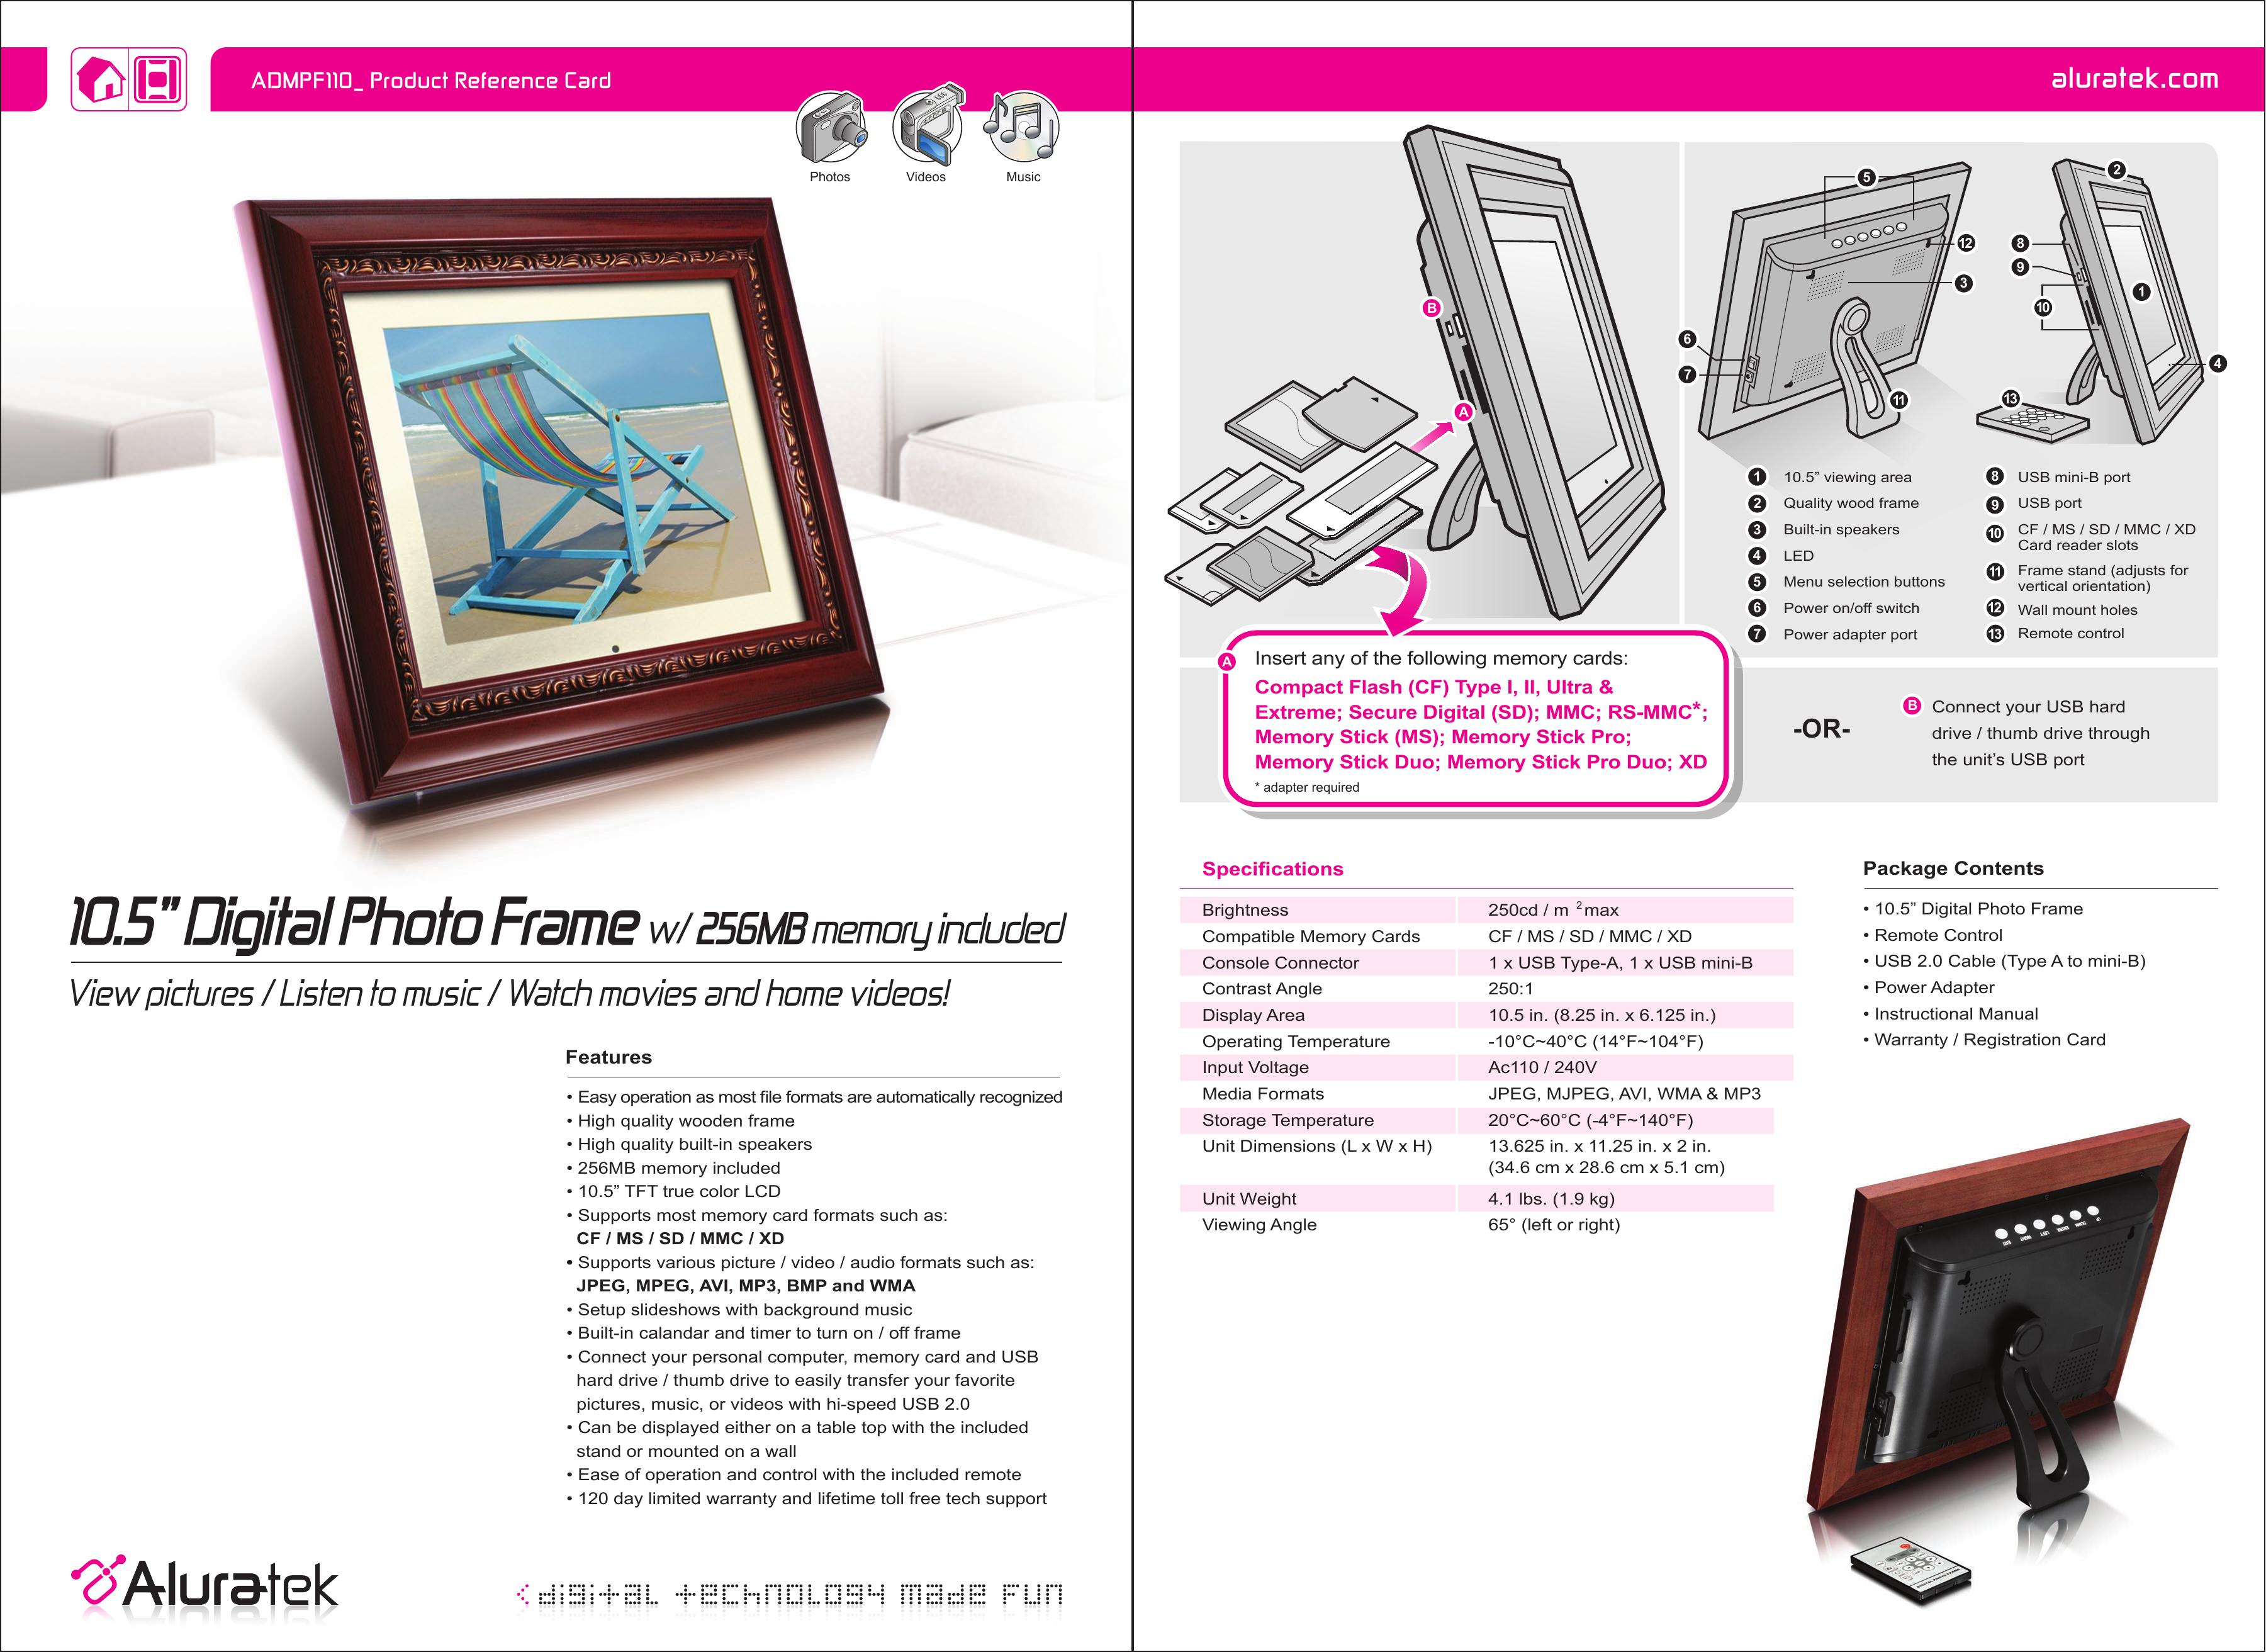 Aluratek ADMPF110 Digital Photo Frame User Manual